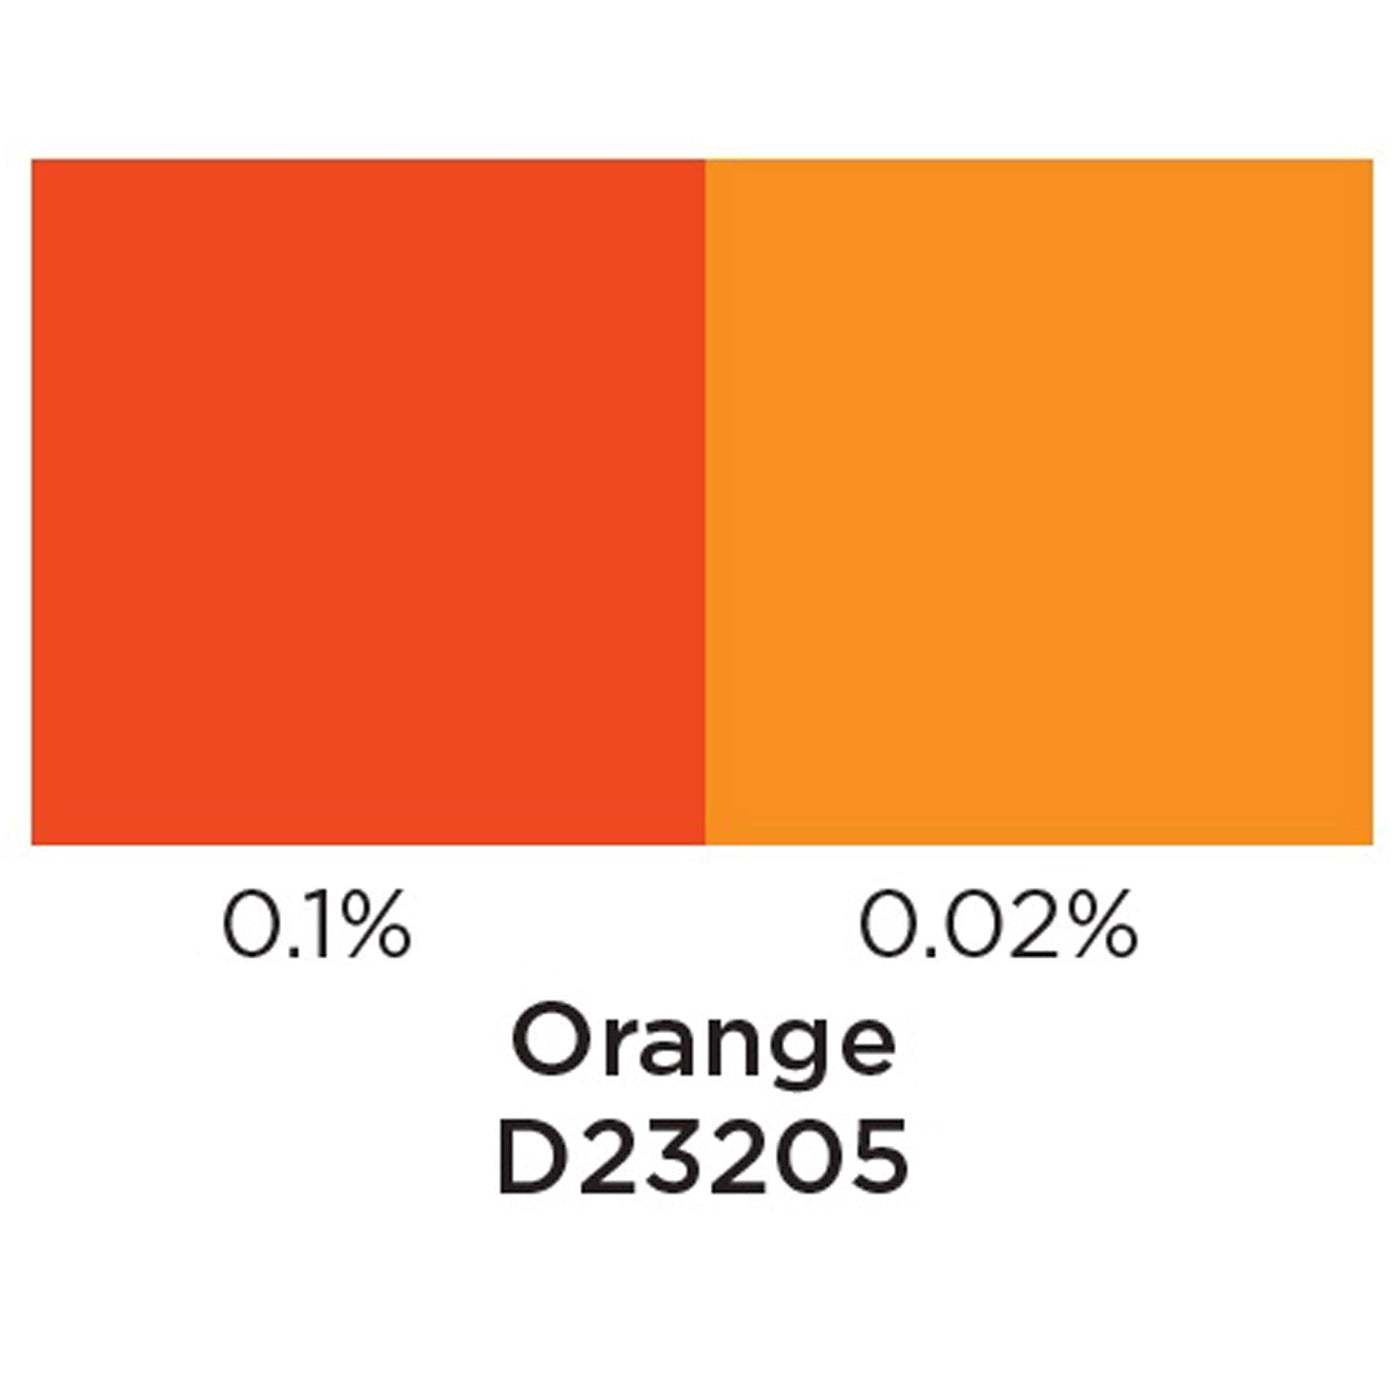 Orange Liquid Dye